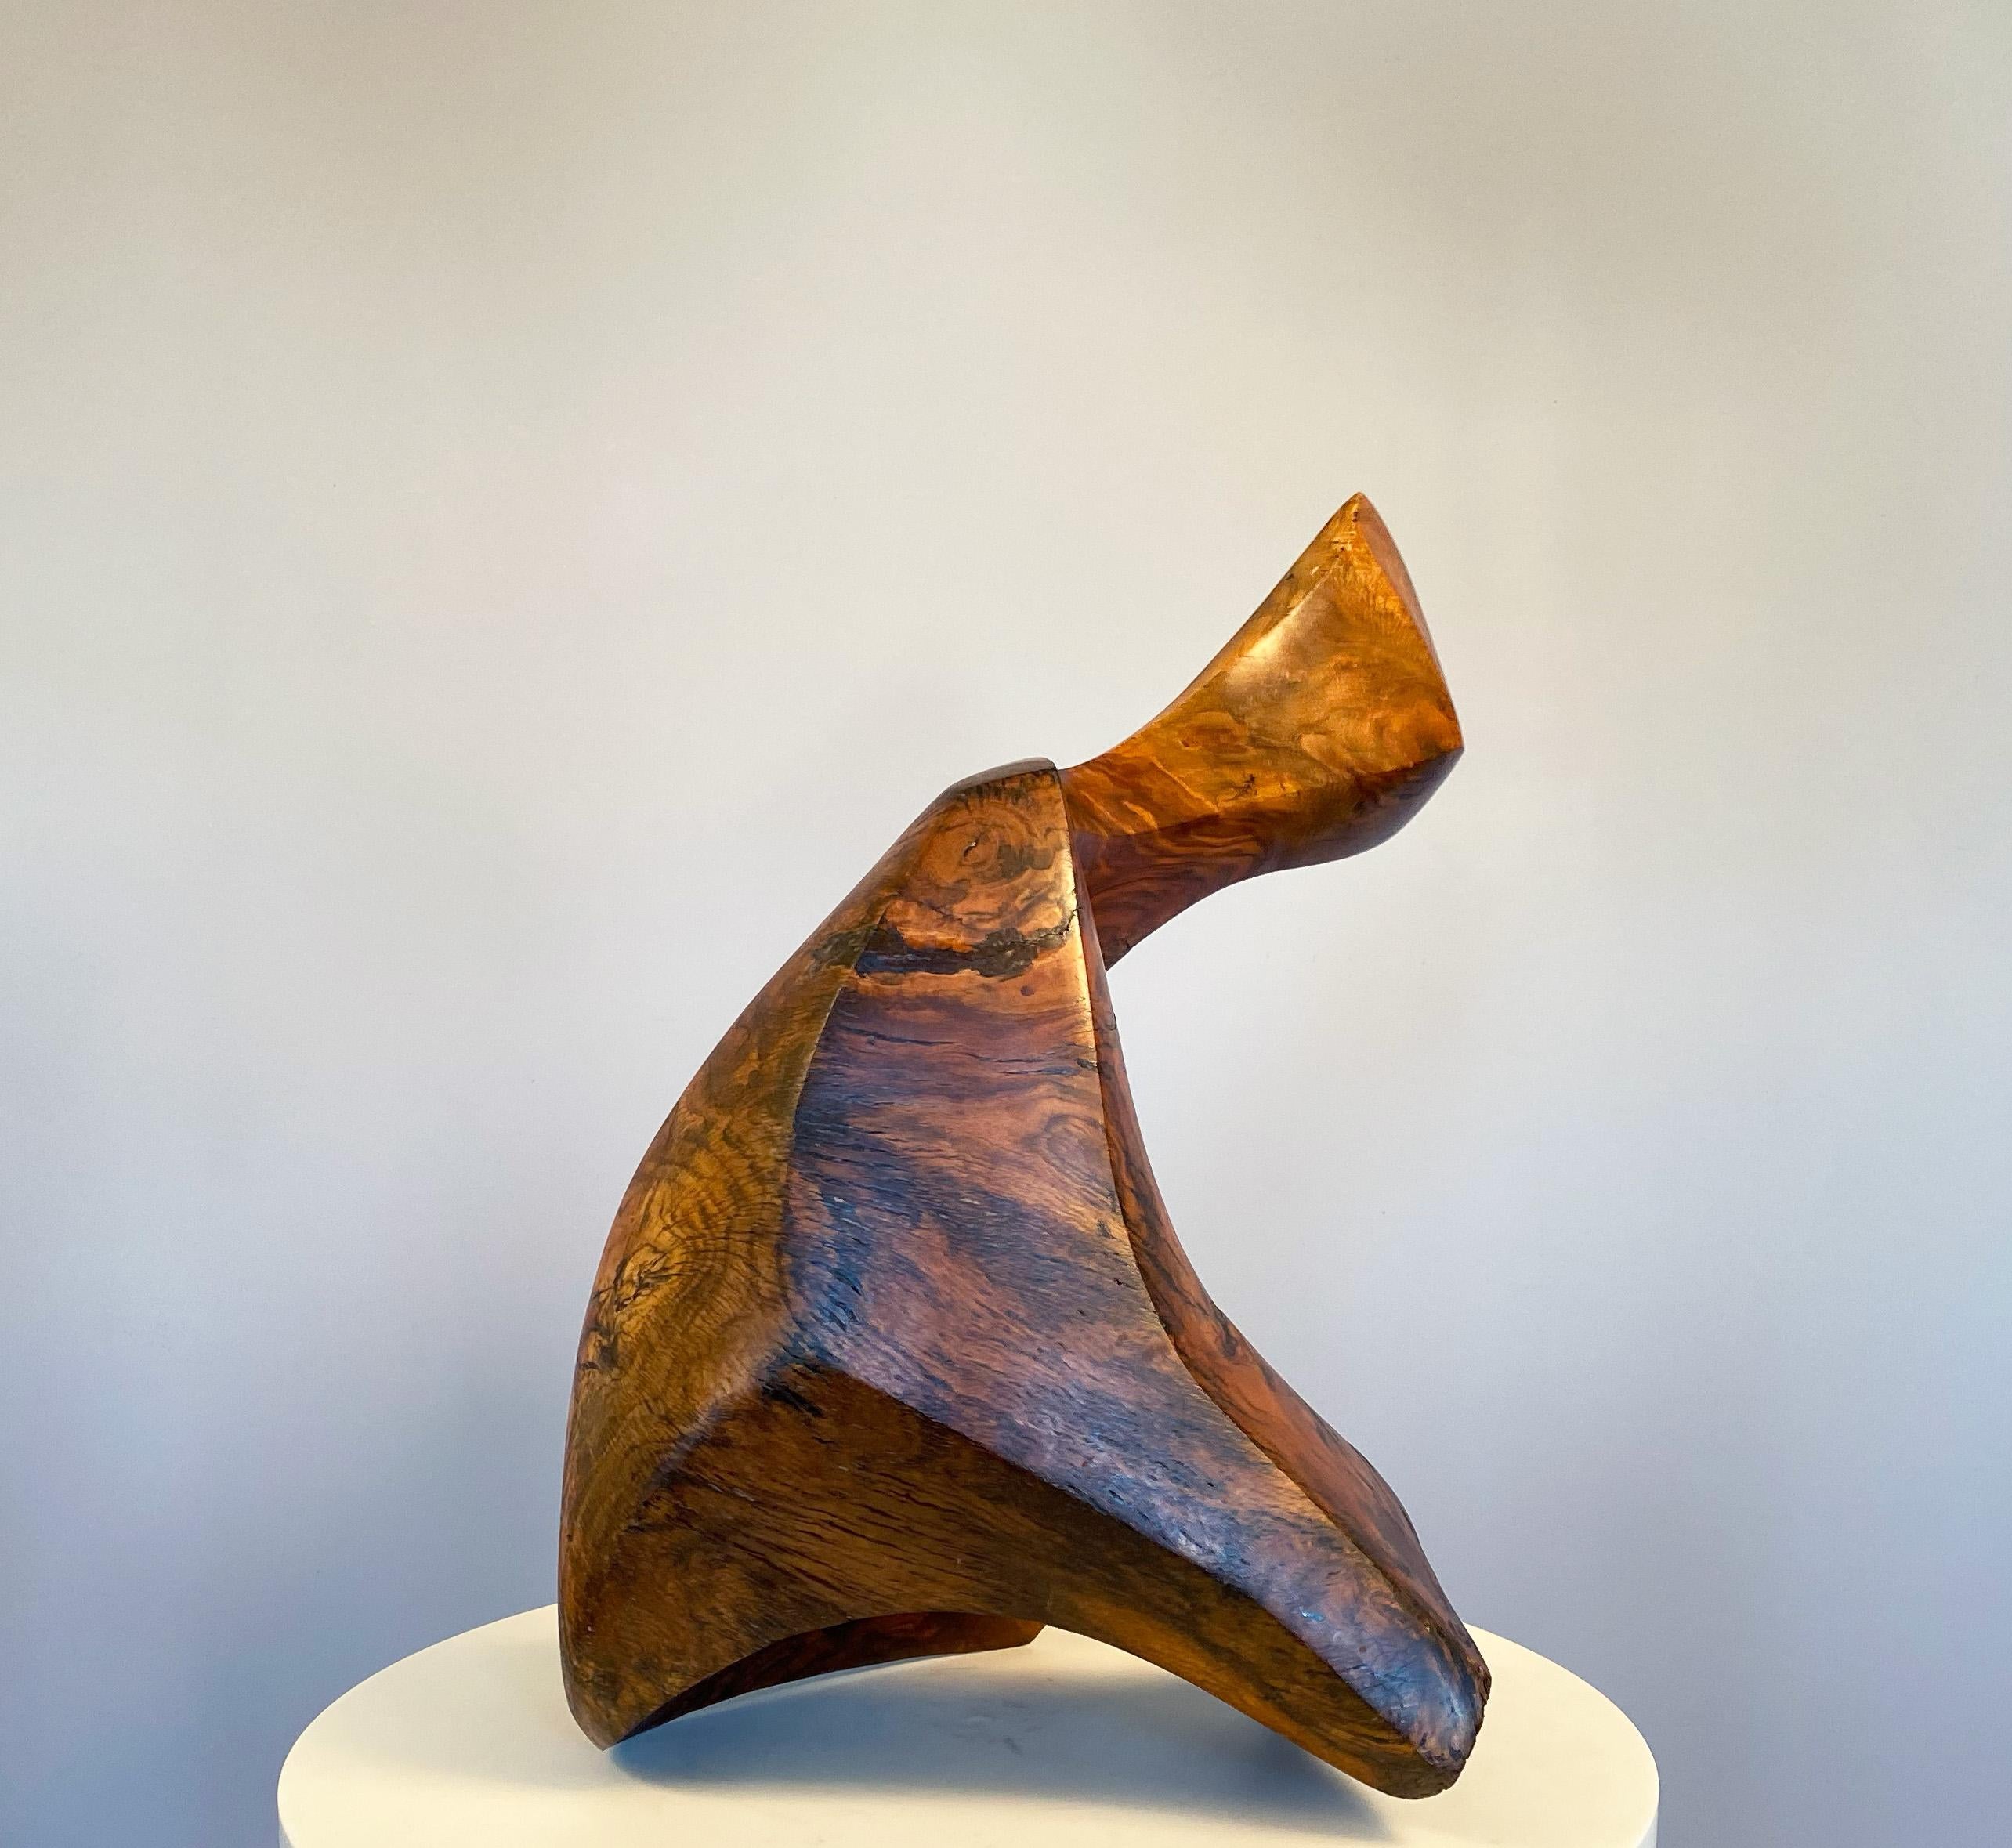 Reclining Form wood sculpture - Abstract Sculpture by Joseph Goethe 